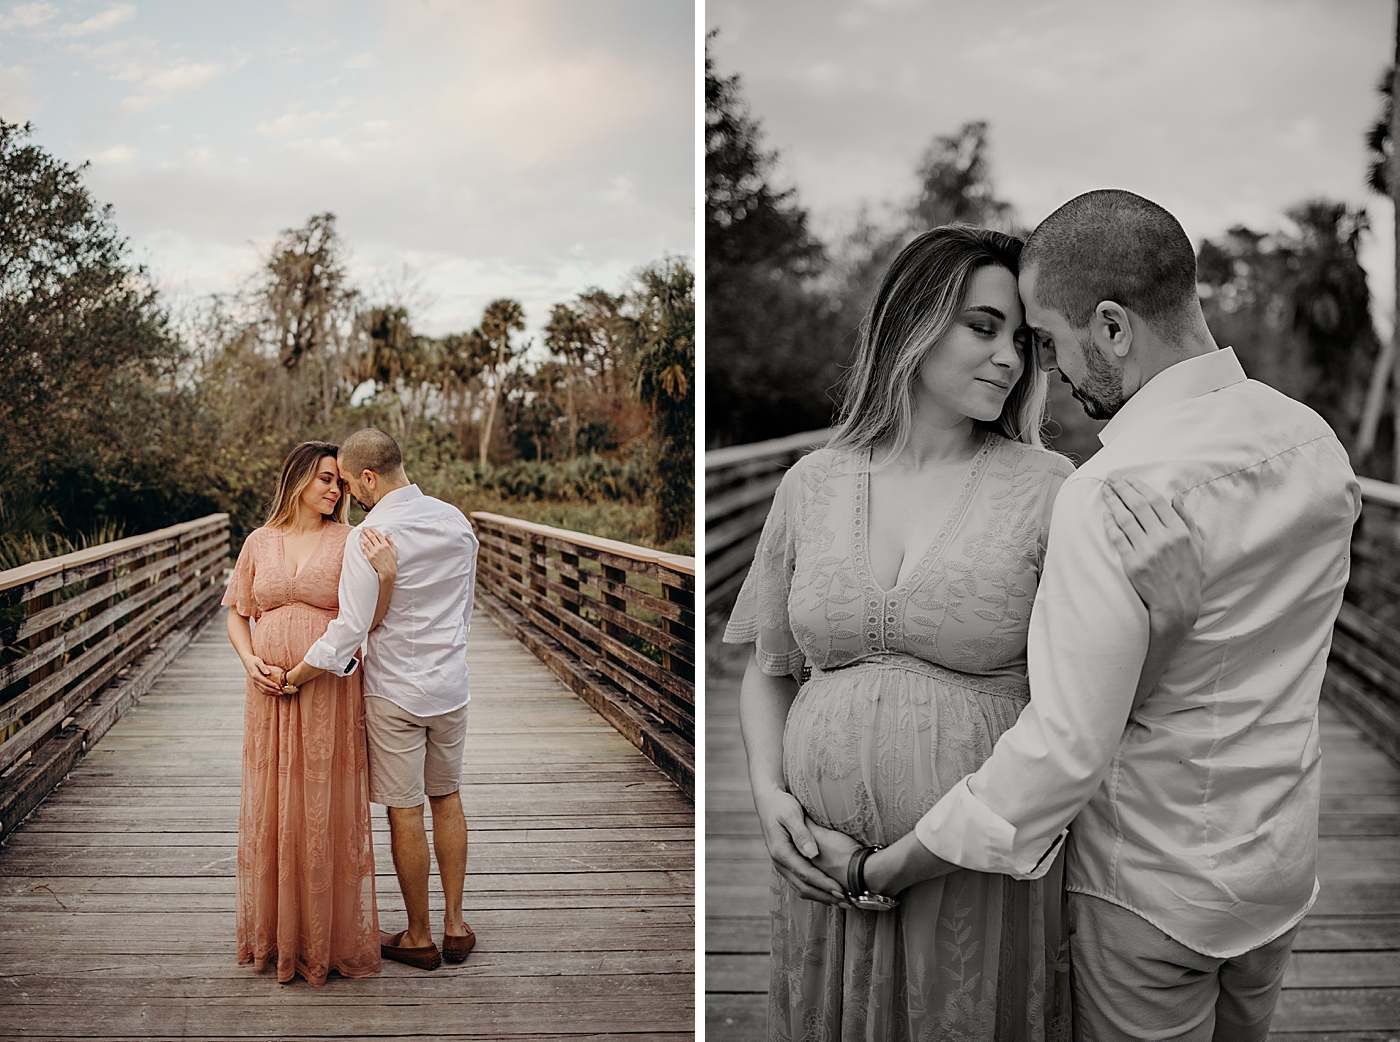 Couple nuzzling on bridge Riverbend Park Maternity Photography by South Florida Family Photographer Maggie Alvarez Photography